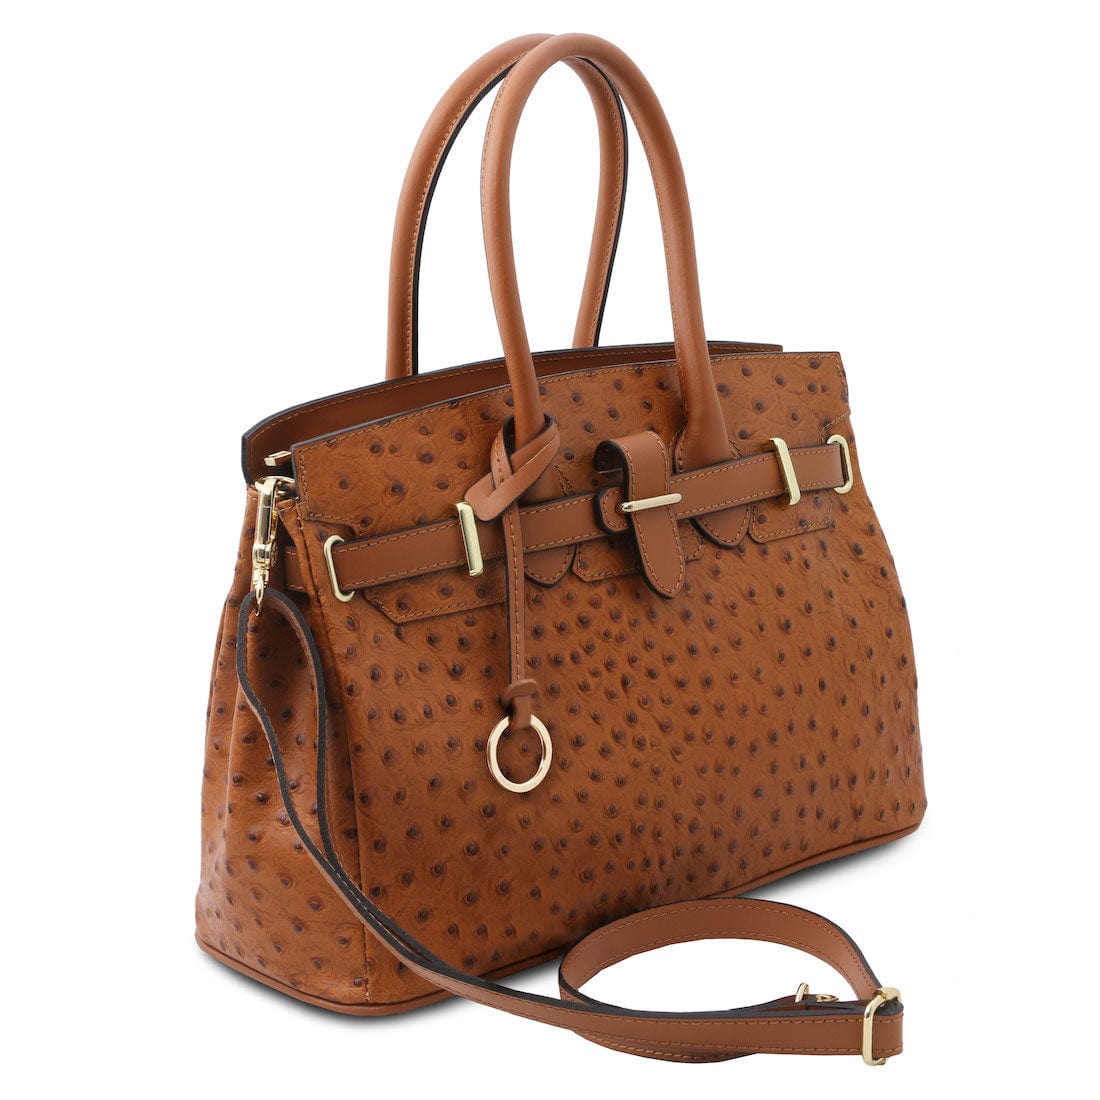 TL Bag - Handbag in ostrich-print leather | TL142120 - Premium Leather handbags - Just €152.50! Shop now at San Rocco Italia